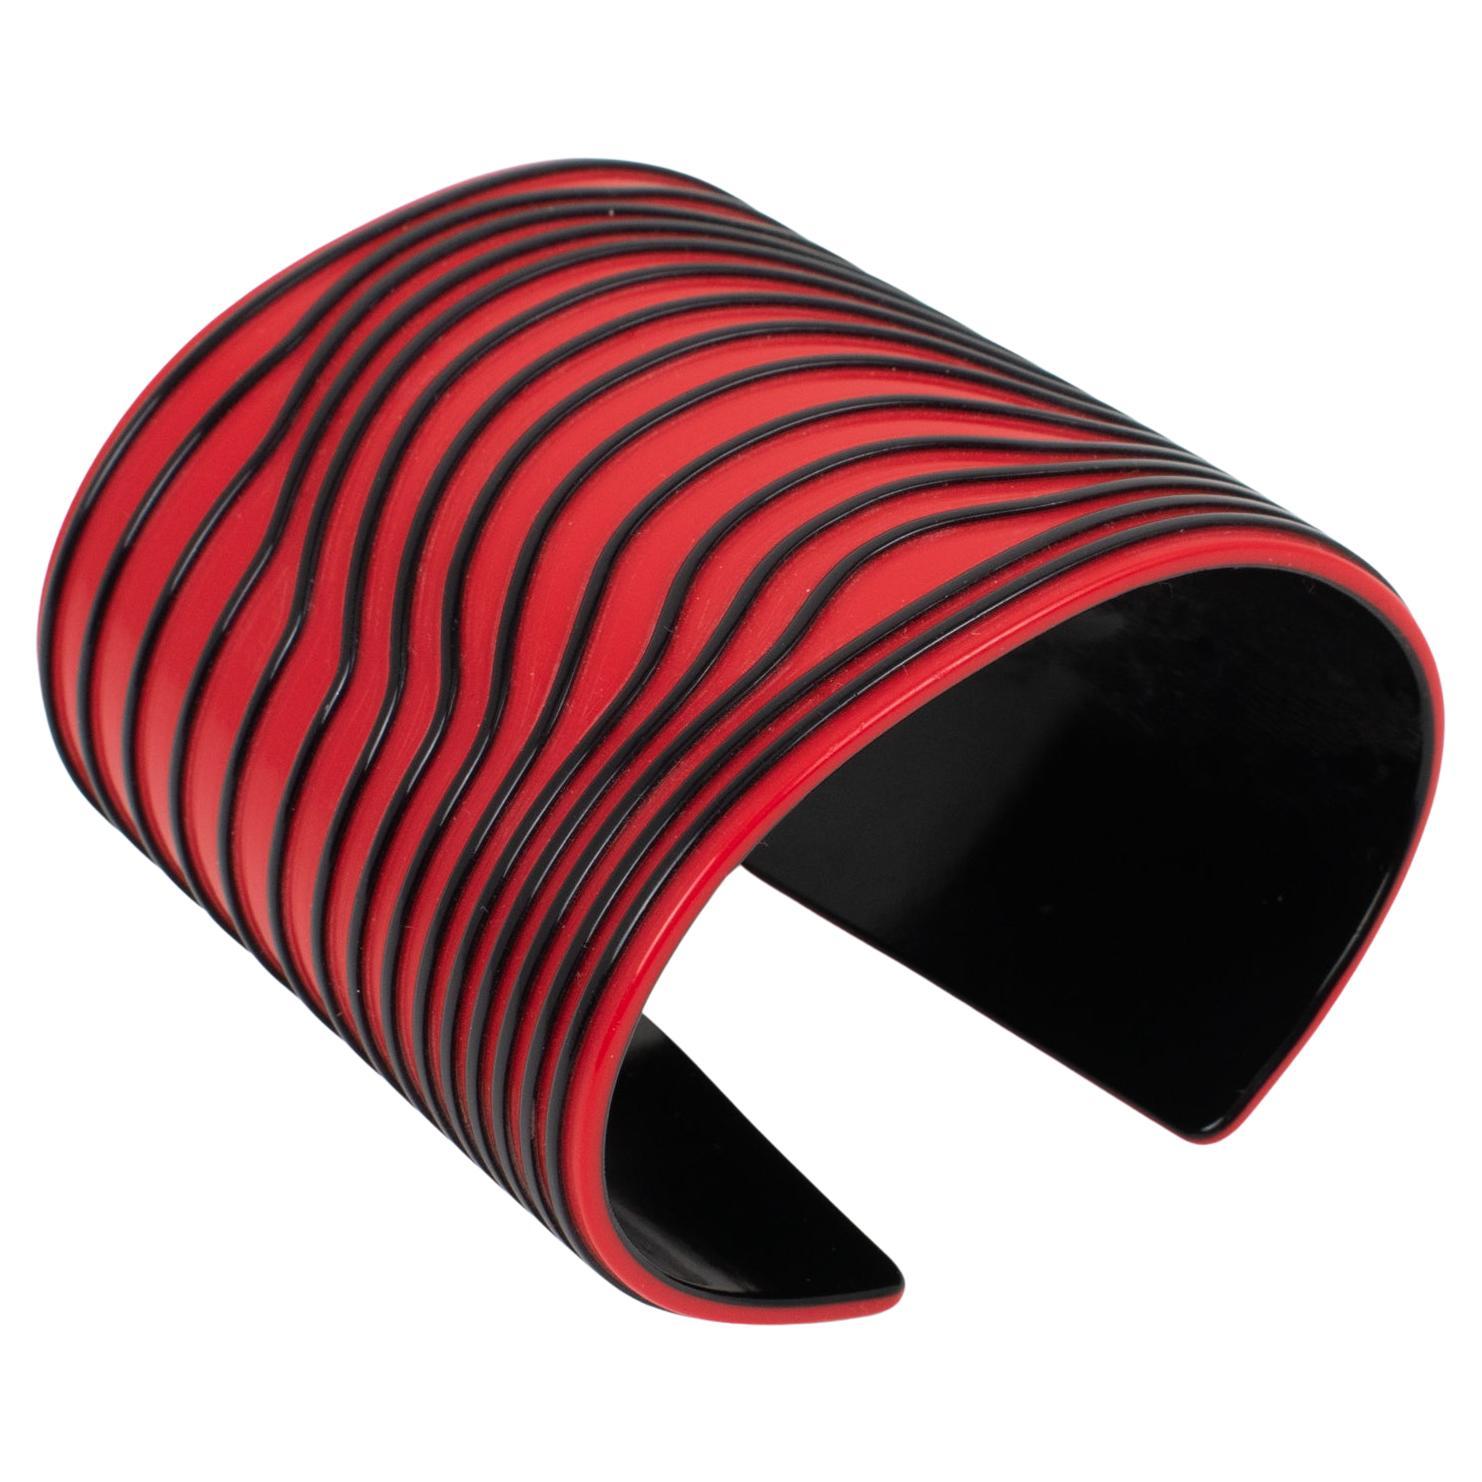 Jean Paul Gaultier Paris Red and Black Resin Cuff Bracelet Kinetic Effect